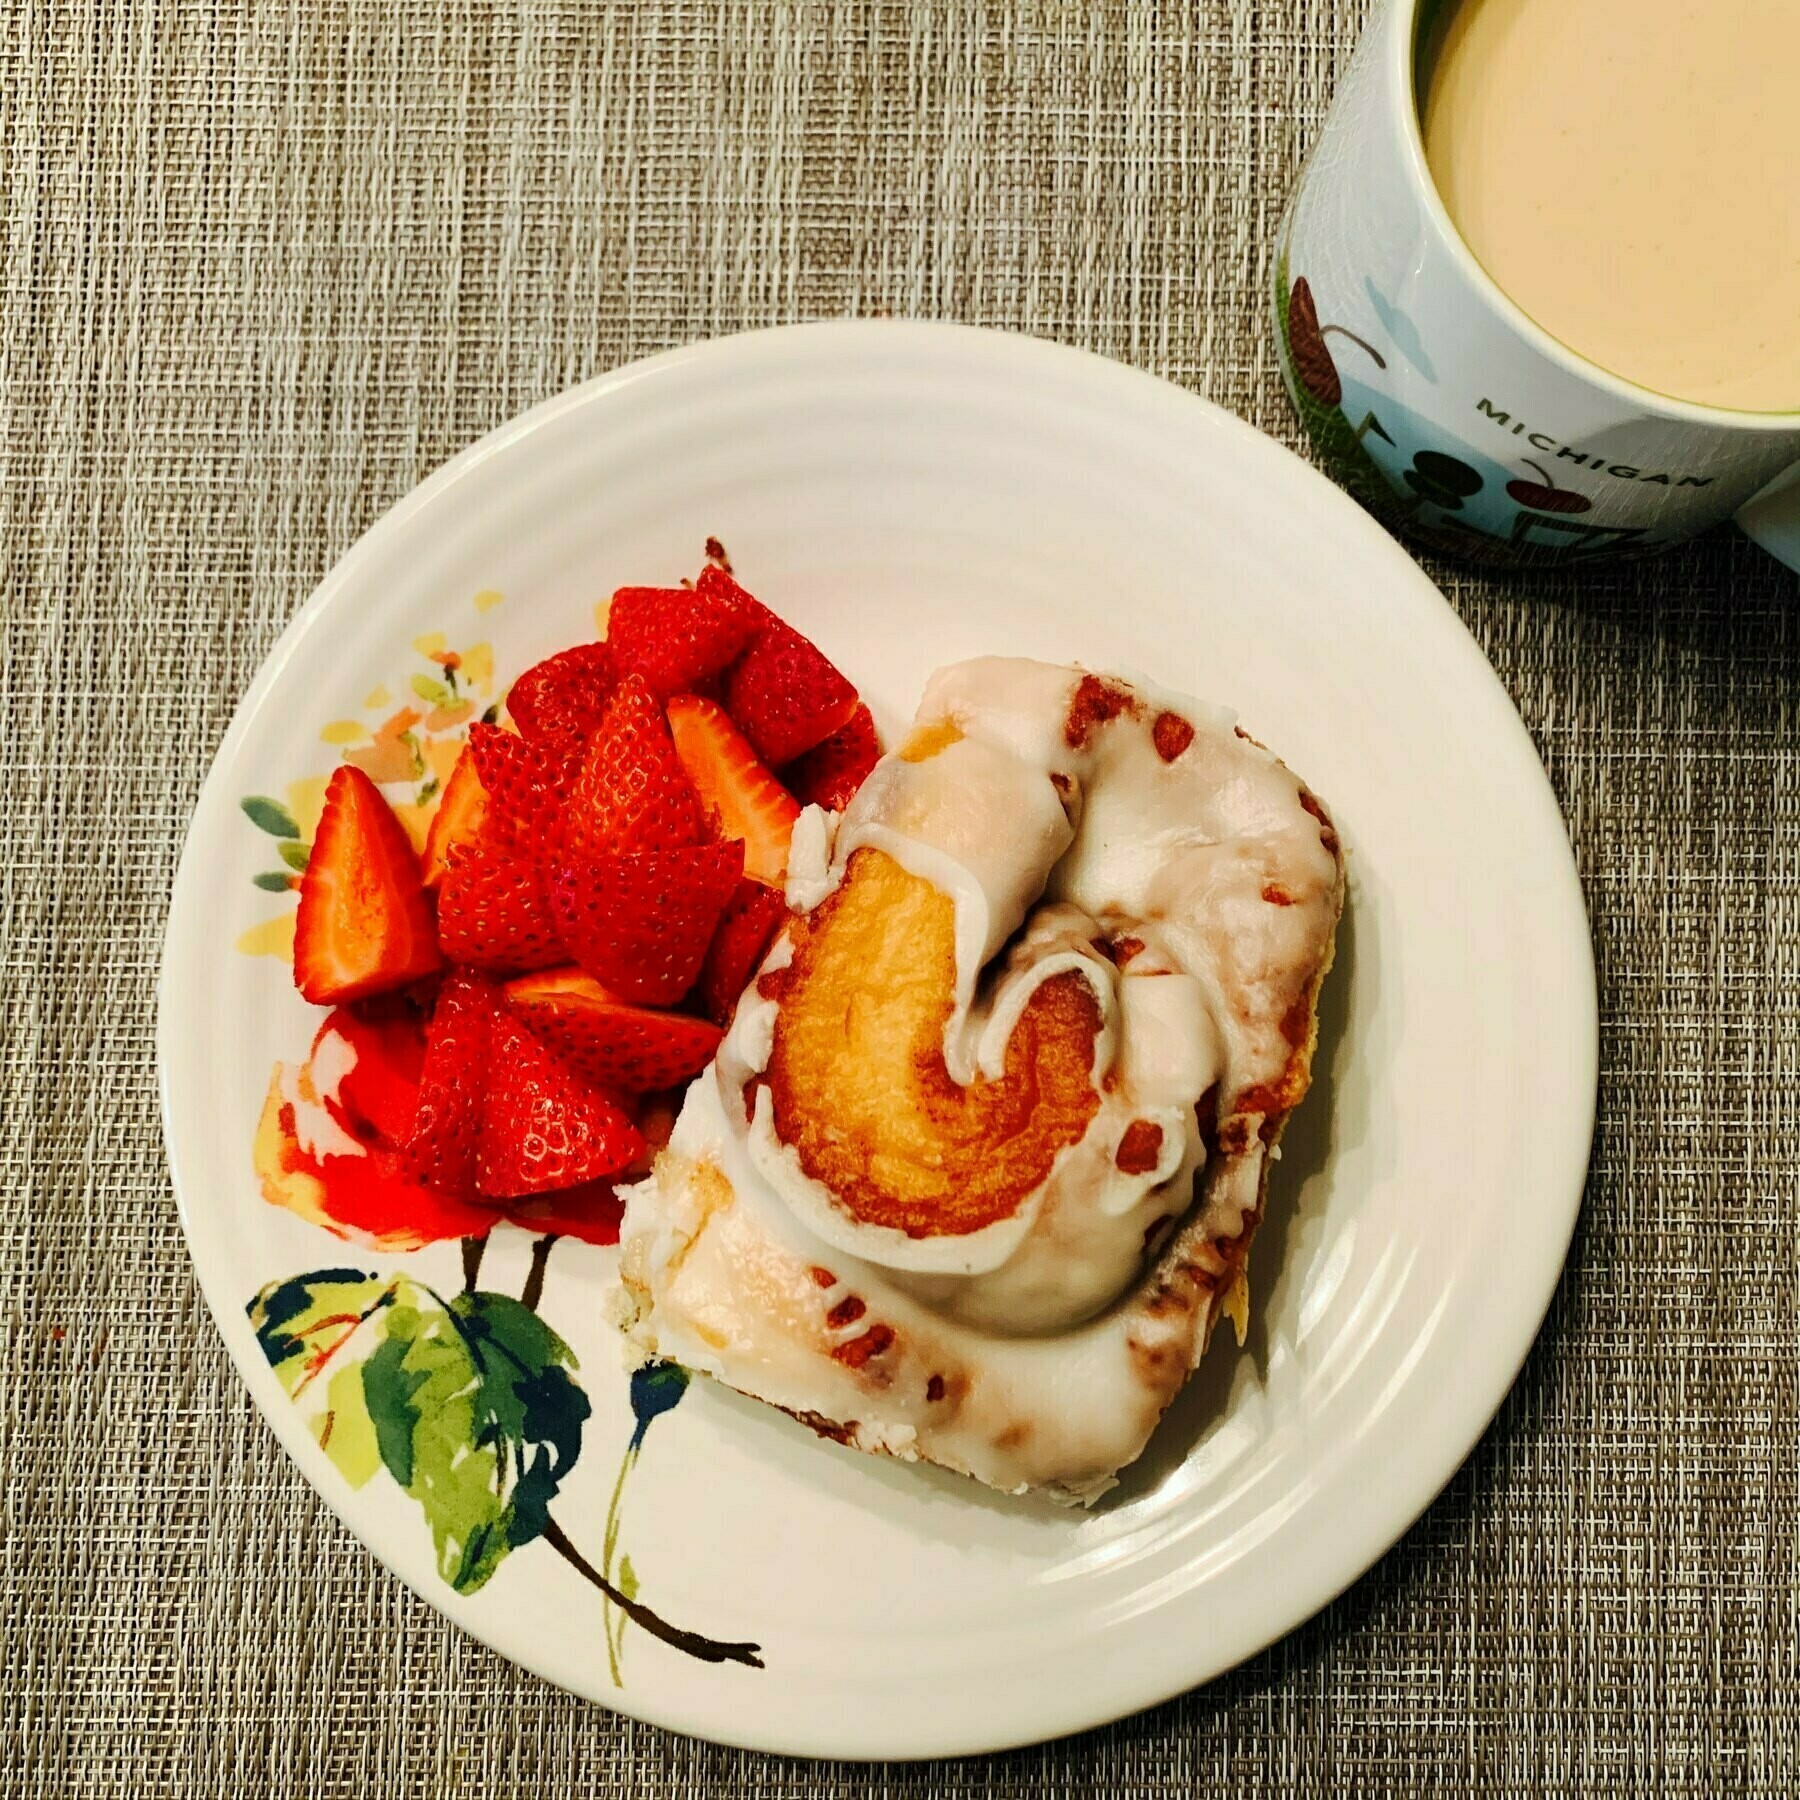 Cinnamon roll, strawberries, and coffee